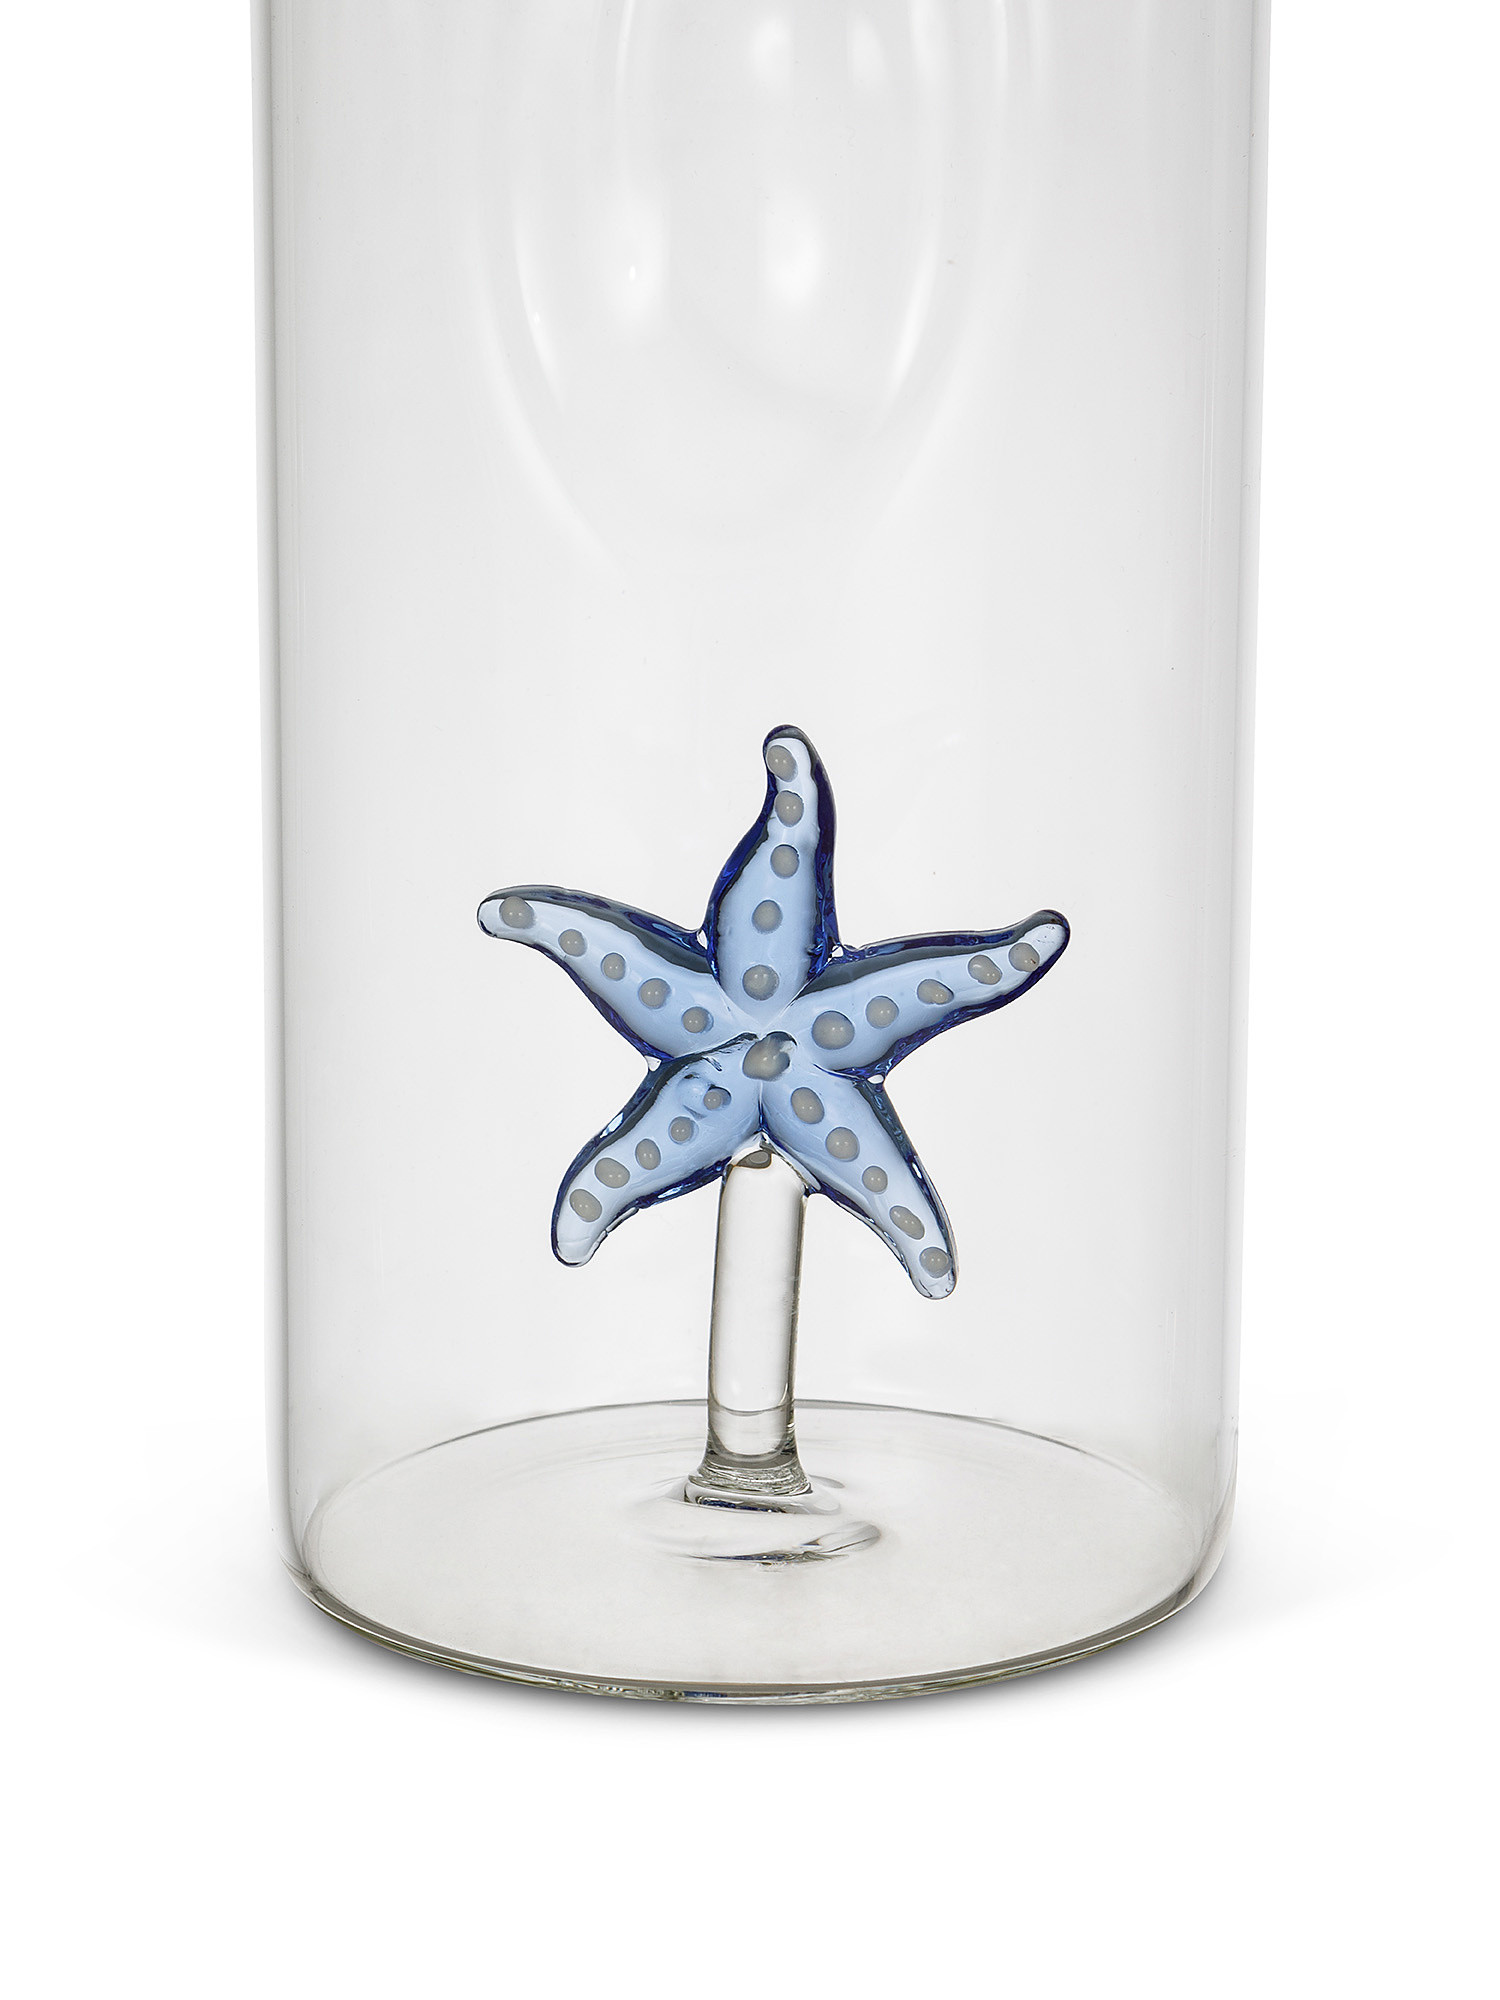 Caraffa in vetro dettaglio stella marina, Trasparente, large image number 1